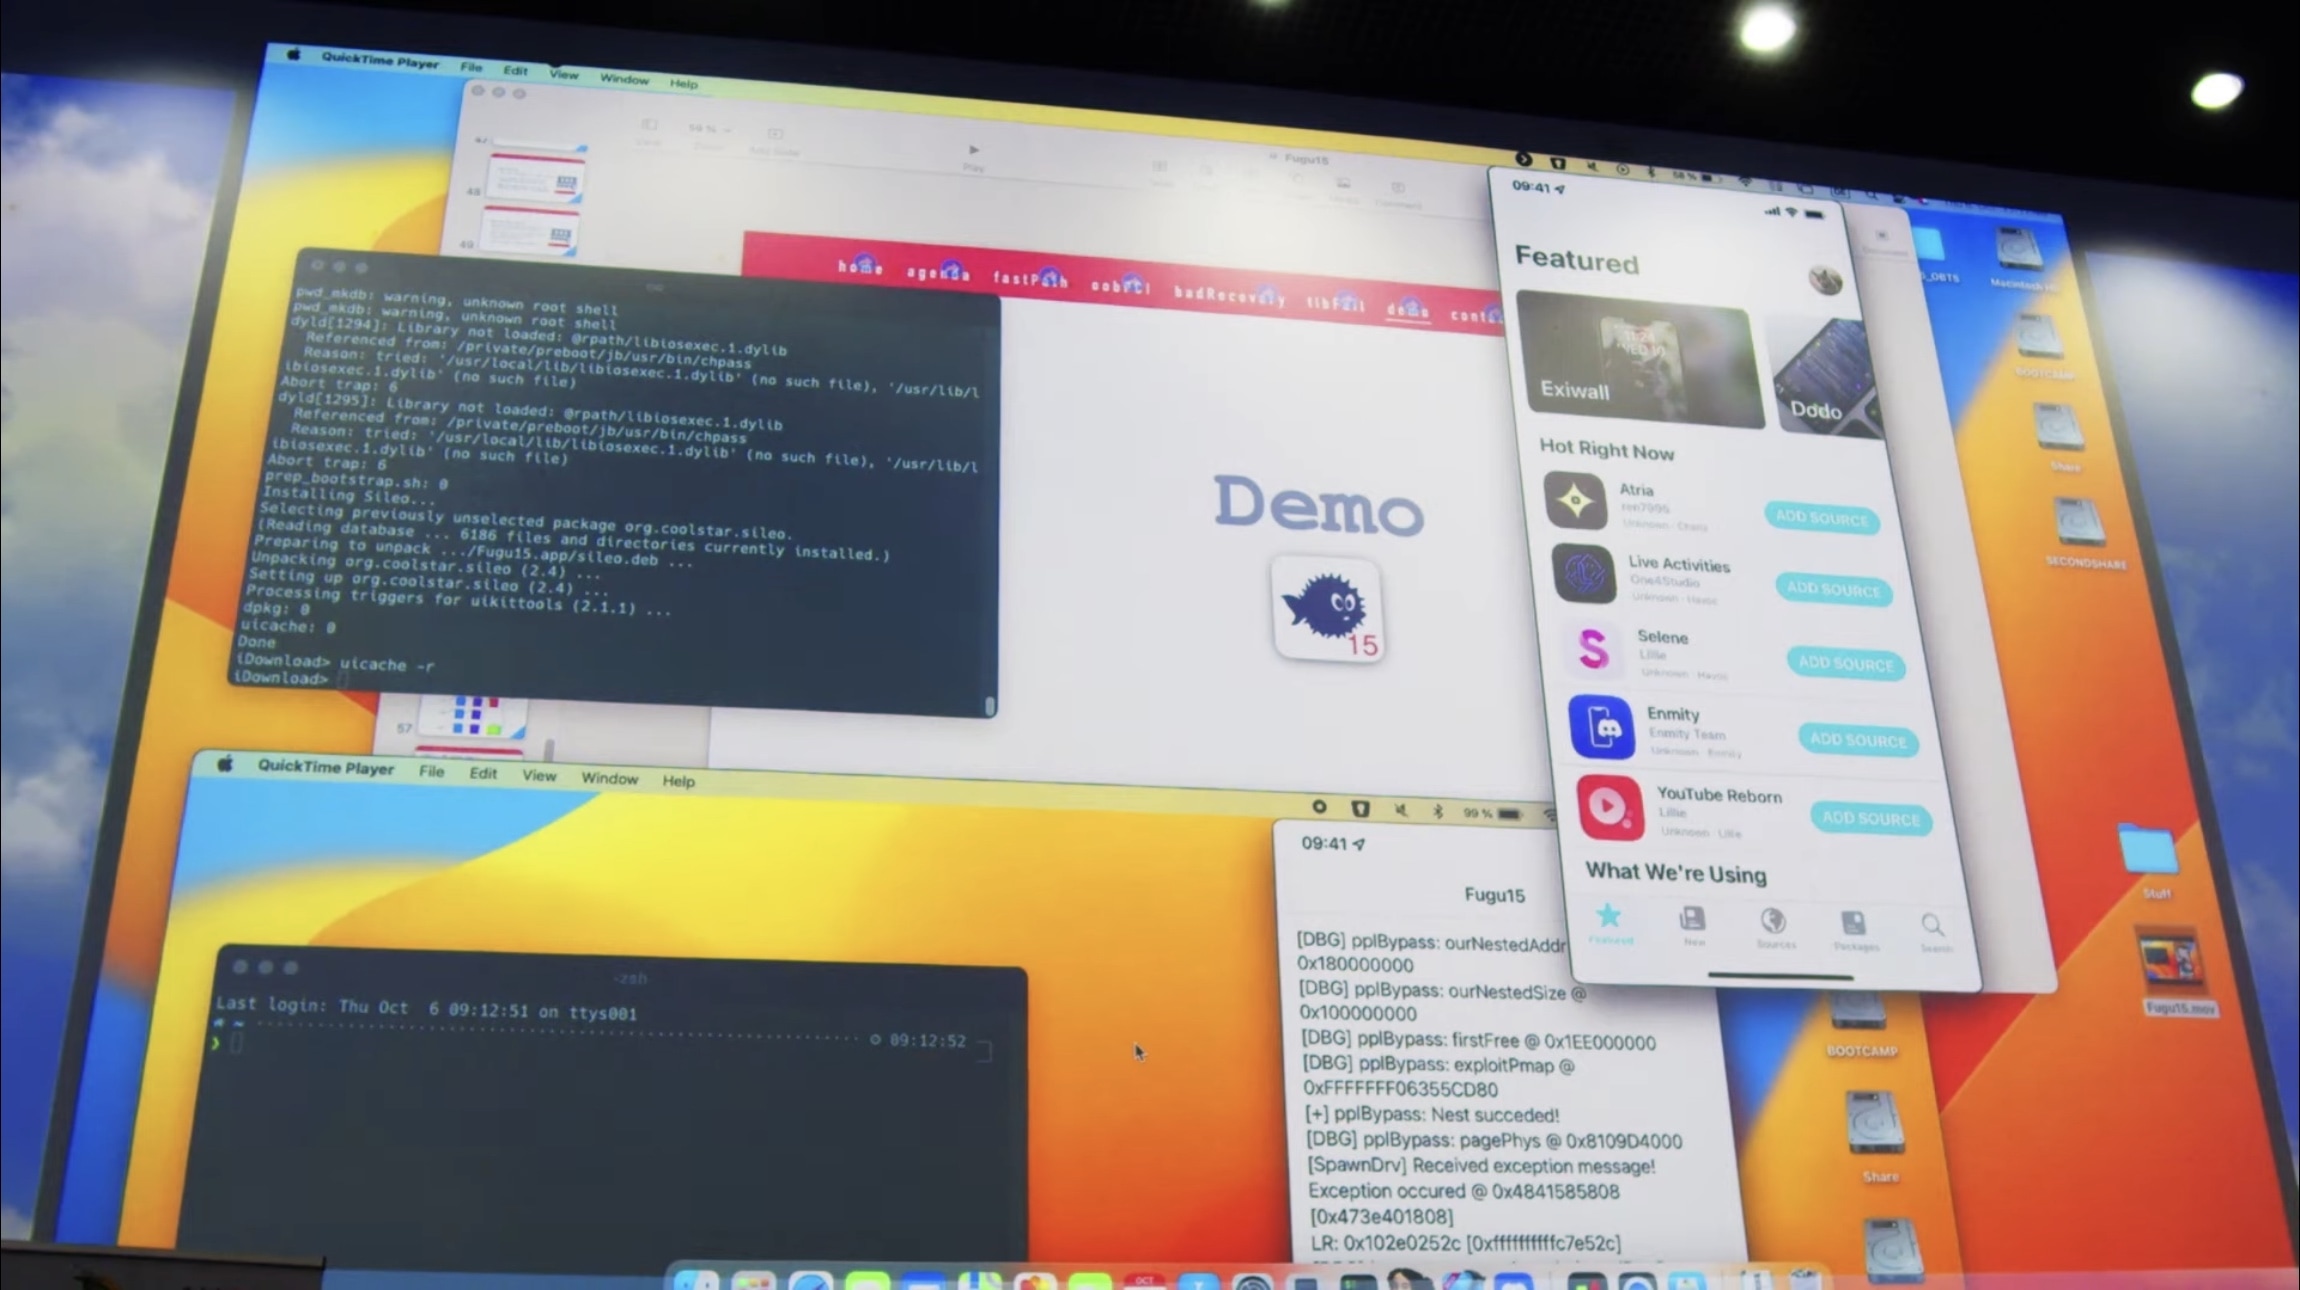 Linus Henze demos the Fugu15 jailbreak on iOS 15.4.1.